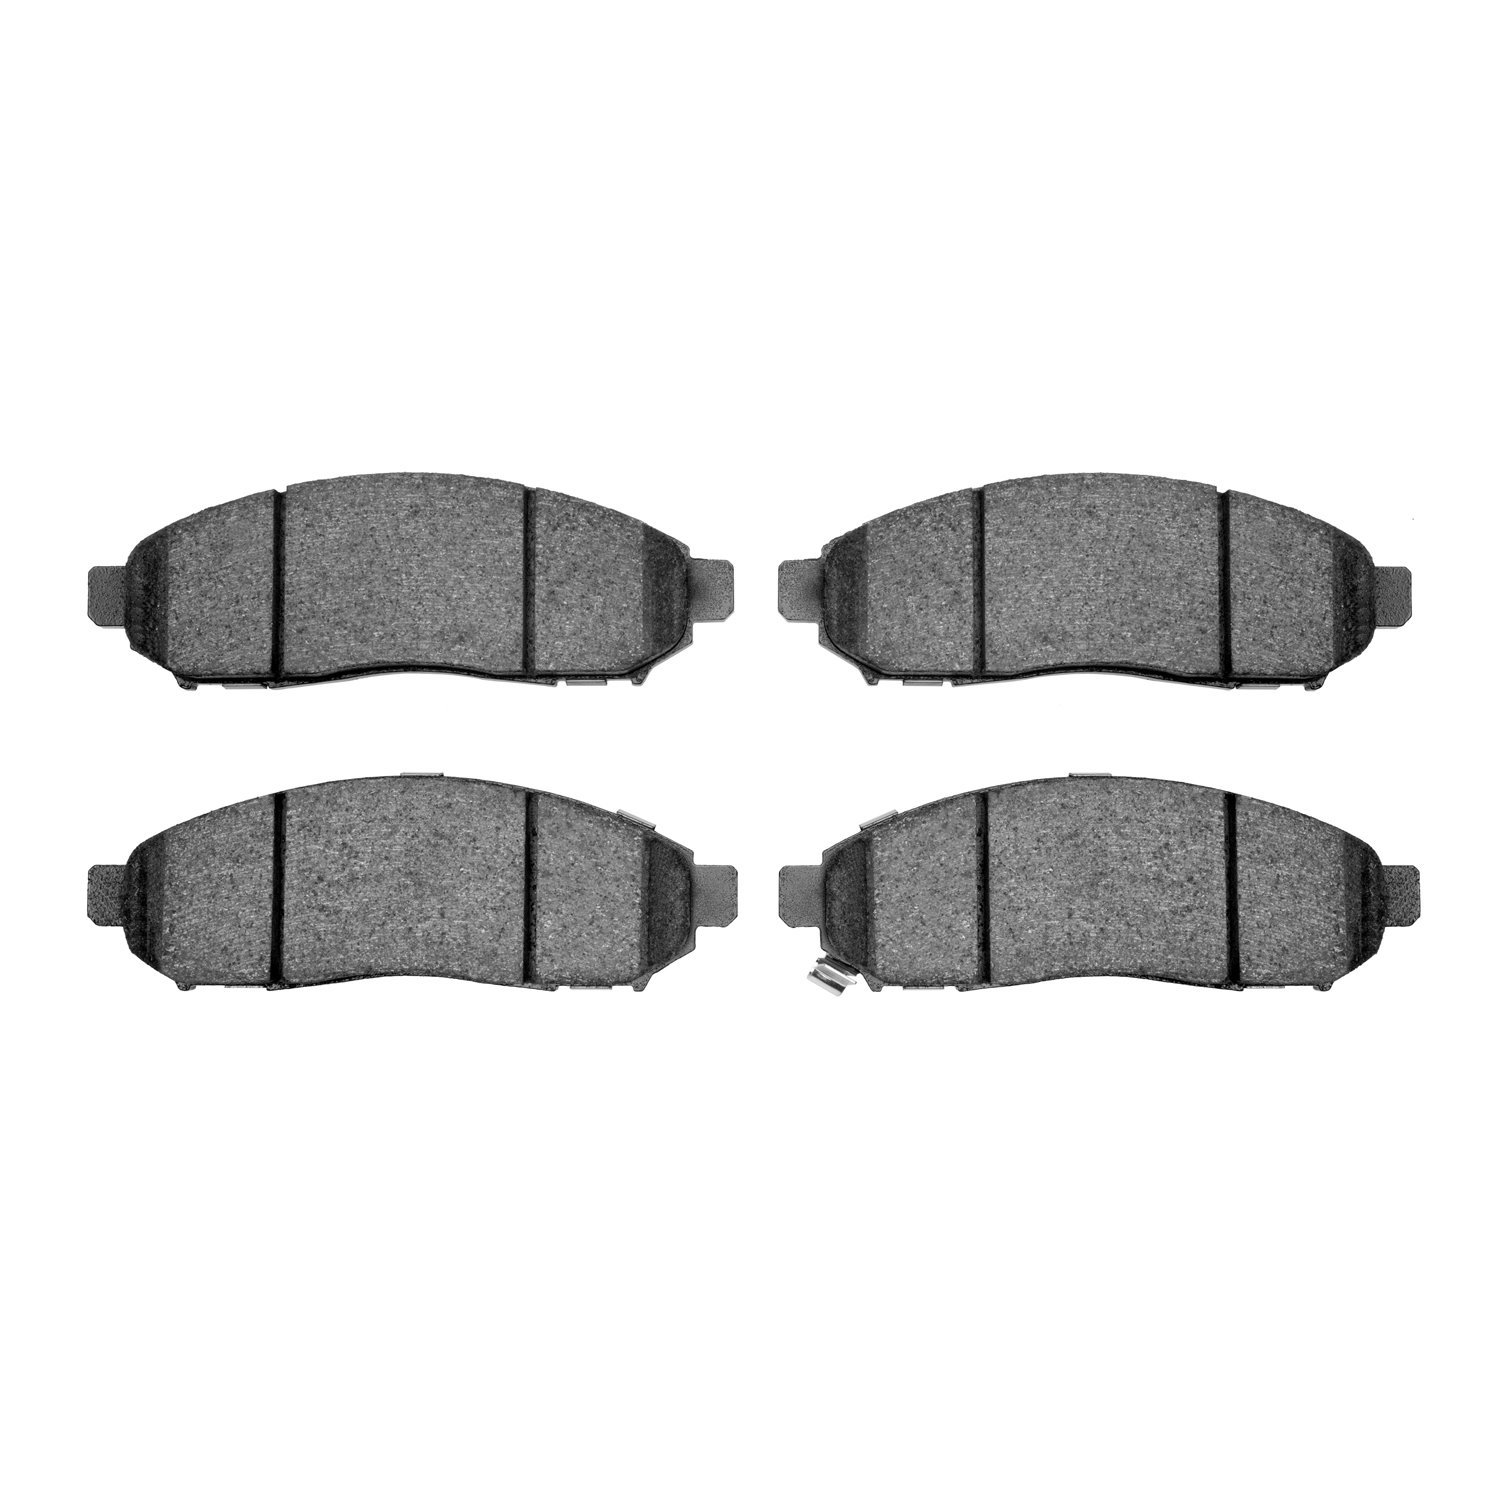 1551-1094-00 5000 Advanced Ceramic Brake Pads, Fits Select Multiple Makes/Models, Position: Front